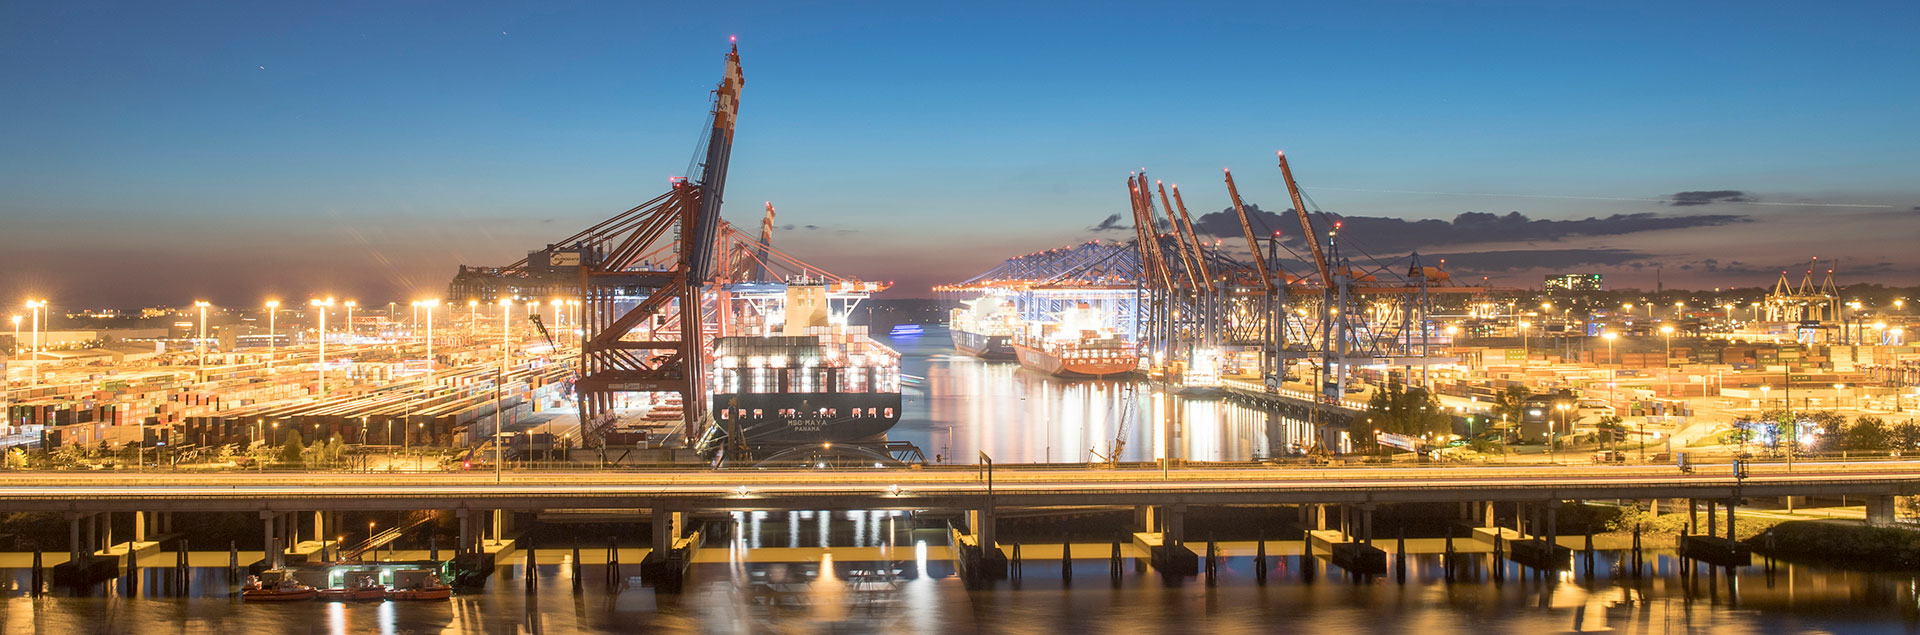 Port Hamburg containership bridge